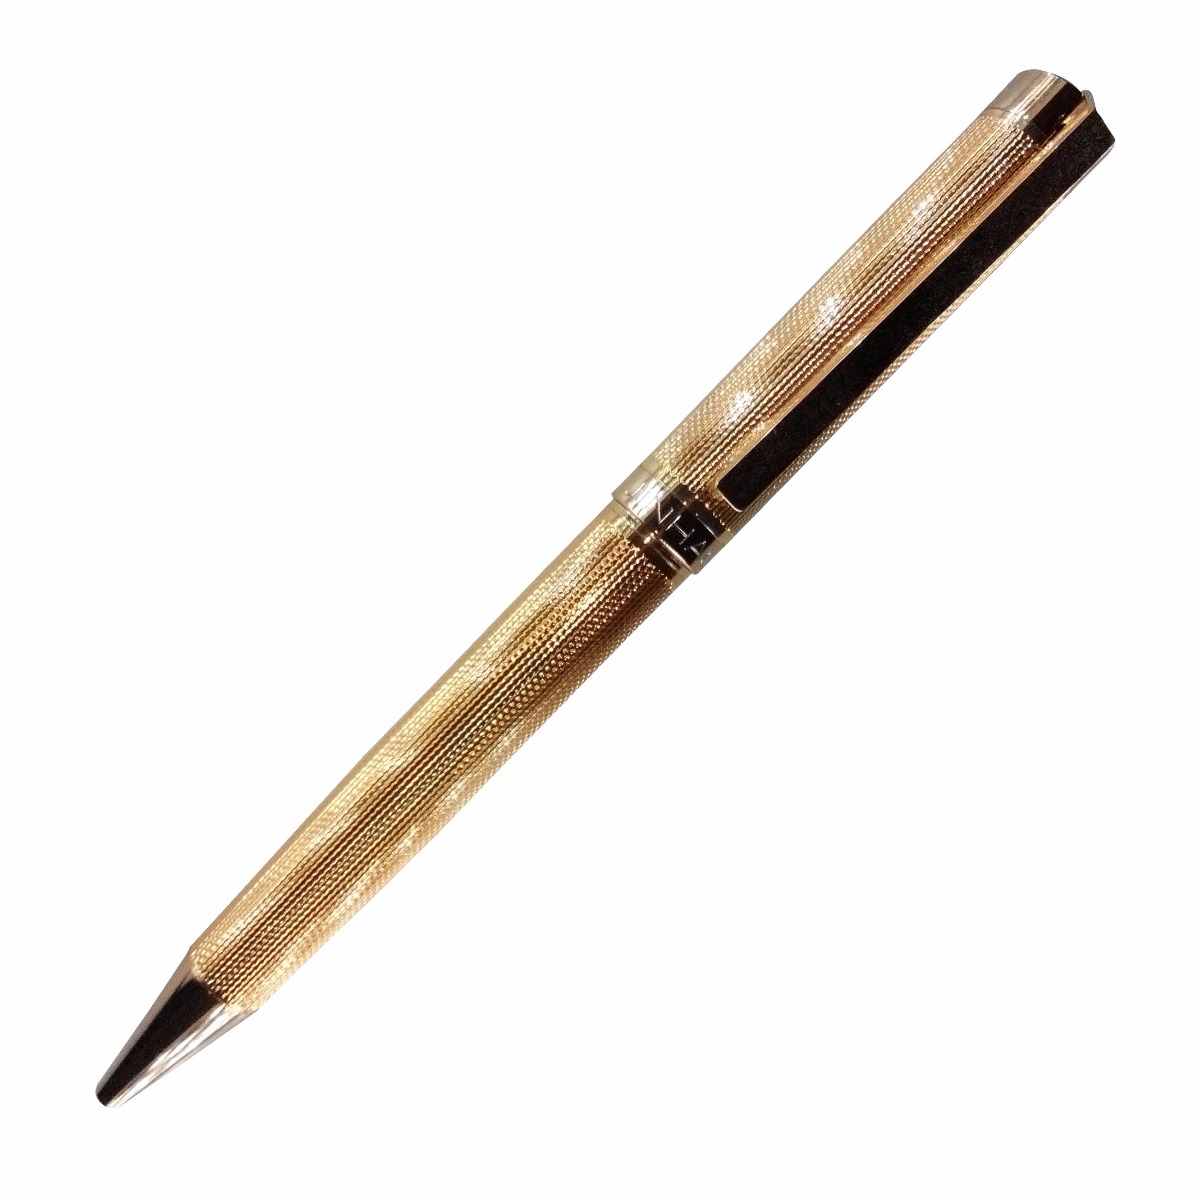 Jinhao Model No : 10513 Golden Color  Body with Cap Type Ball Pen Medium Tip